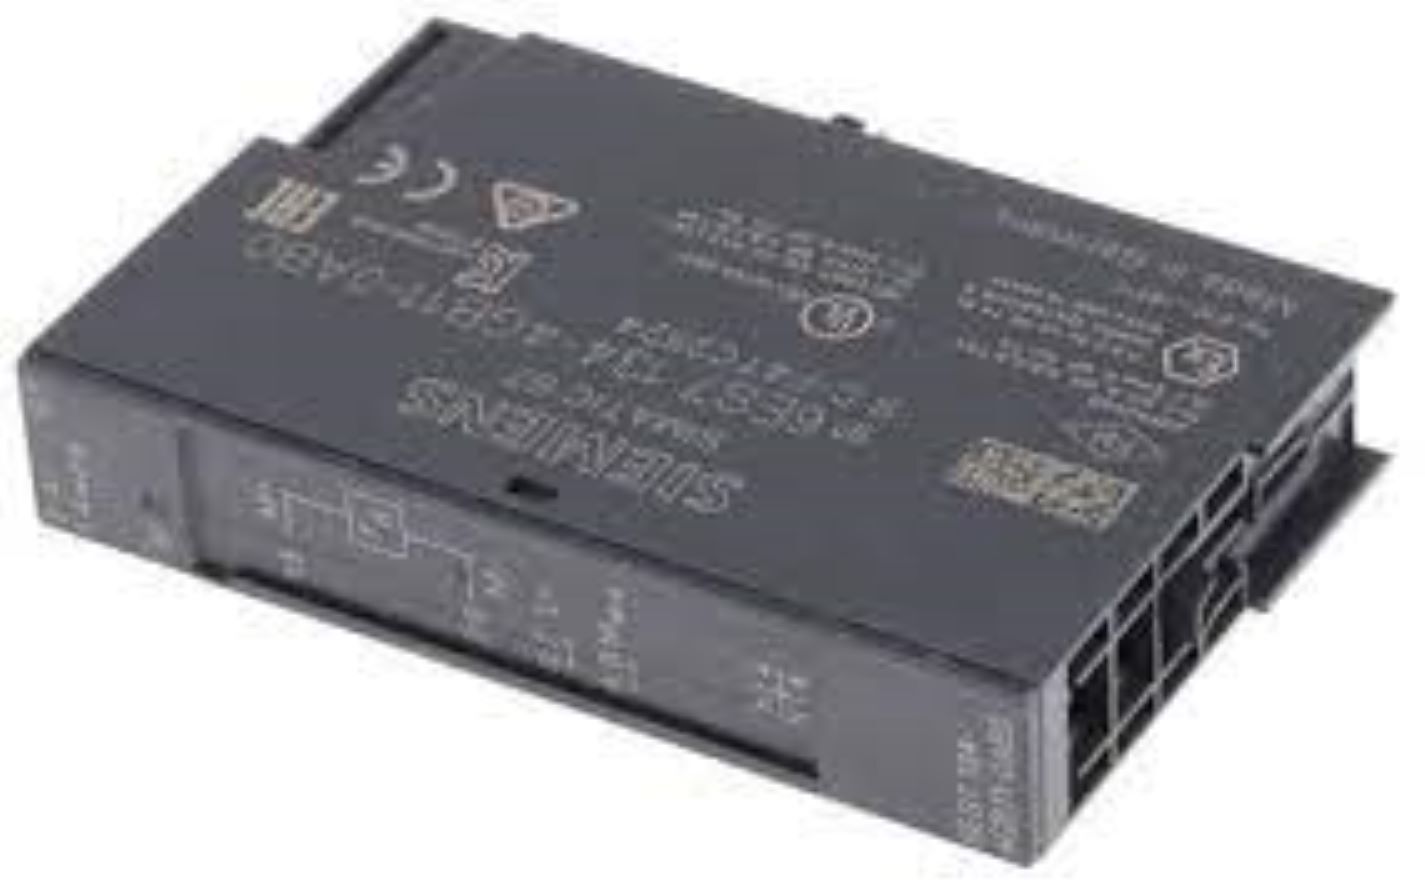 6ES7 134-4GB11-0AB0-siemens programmable logic controller